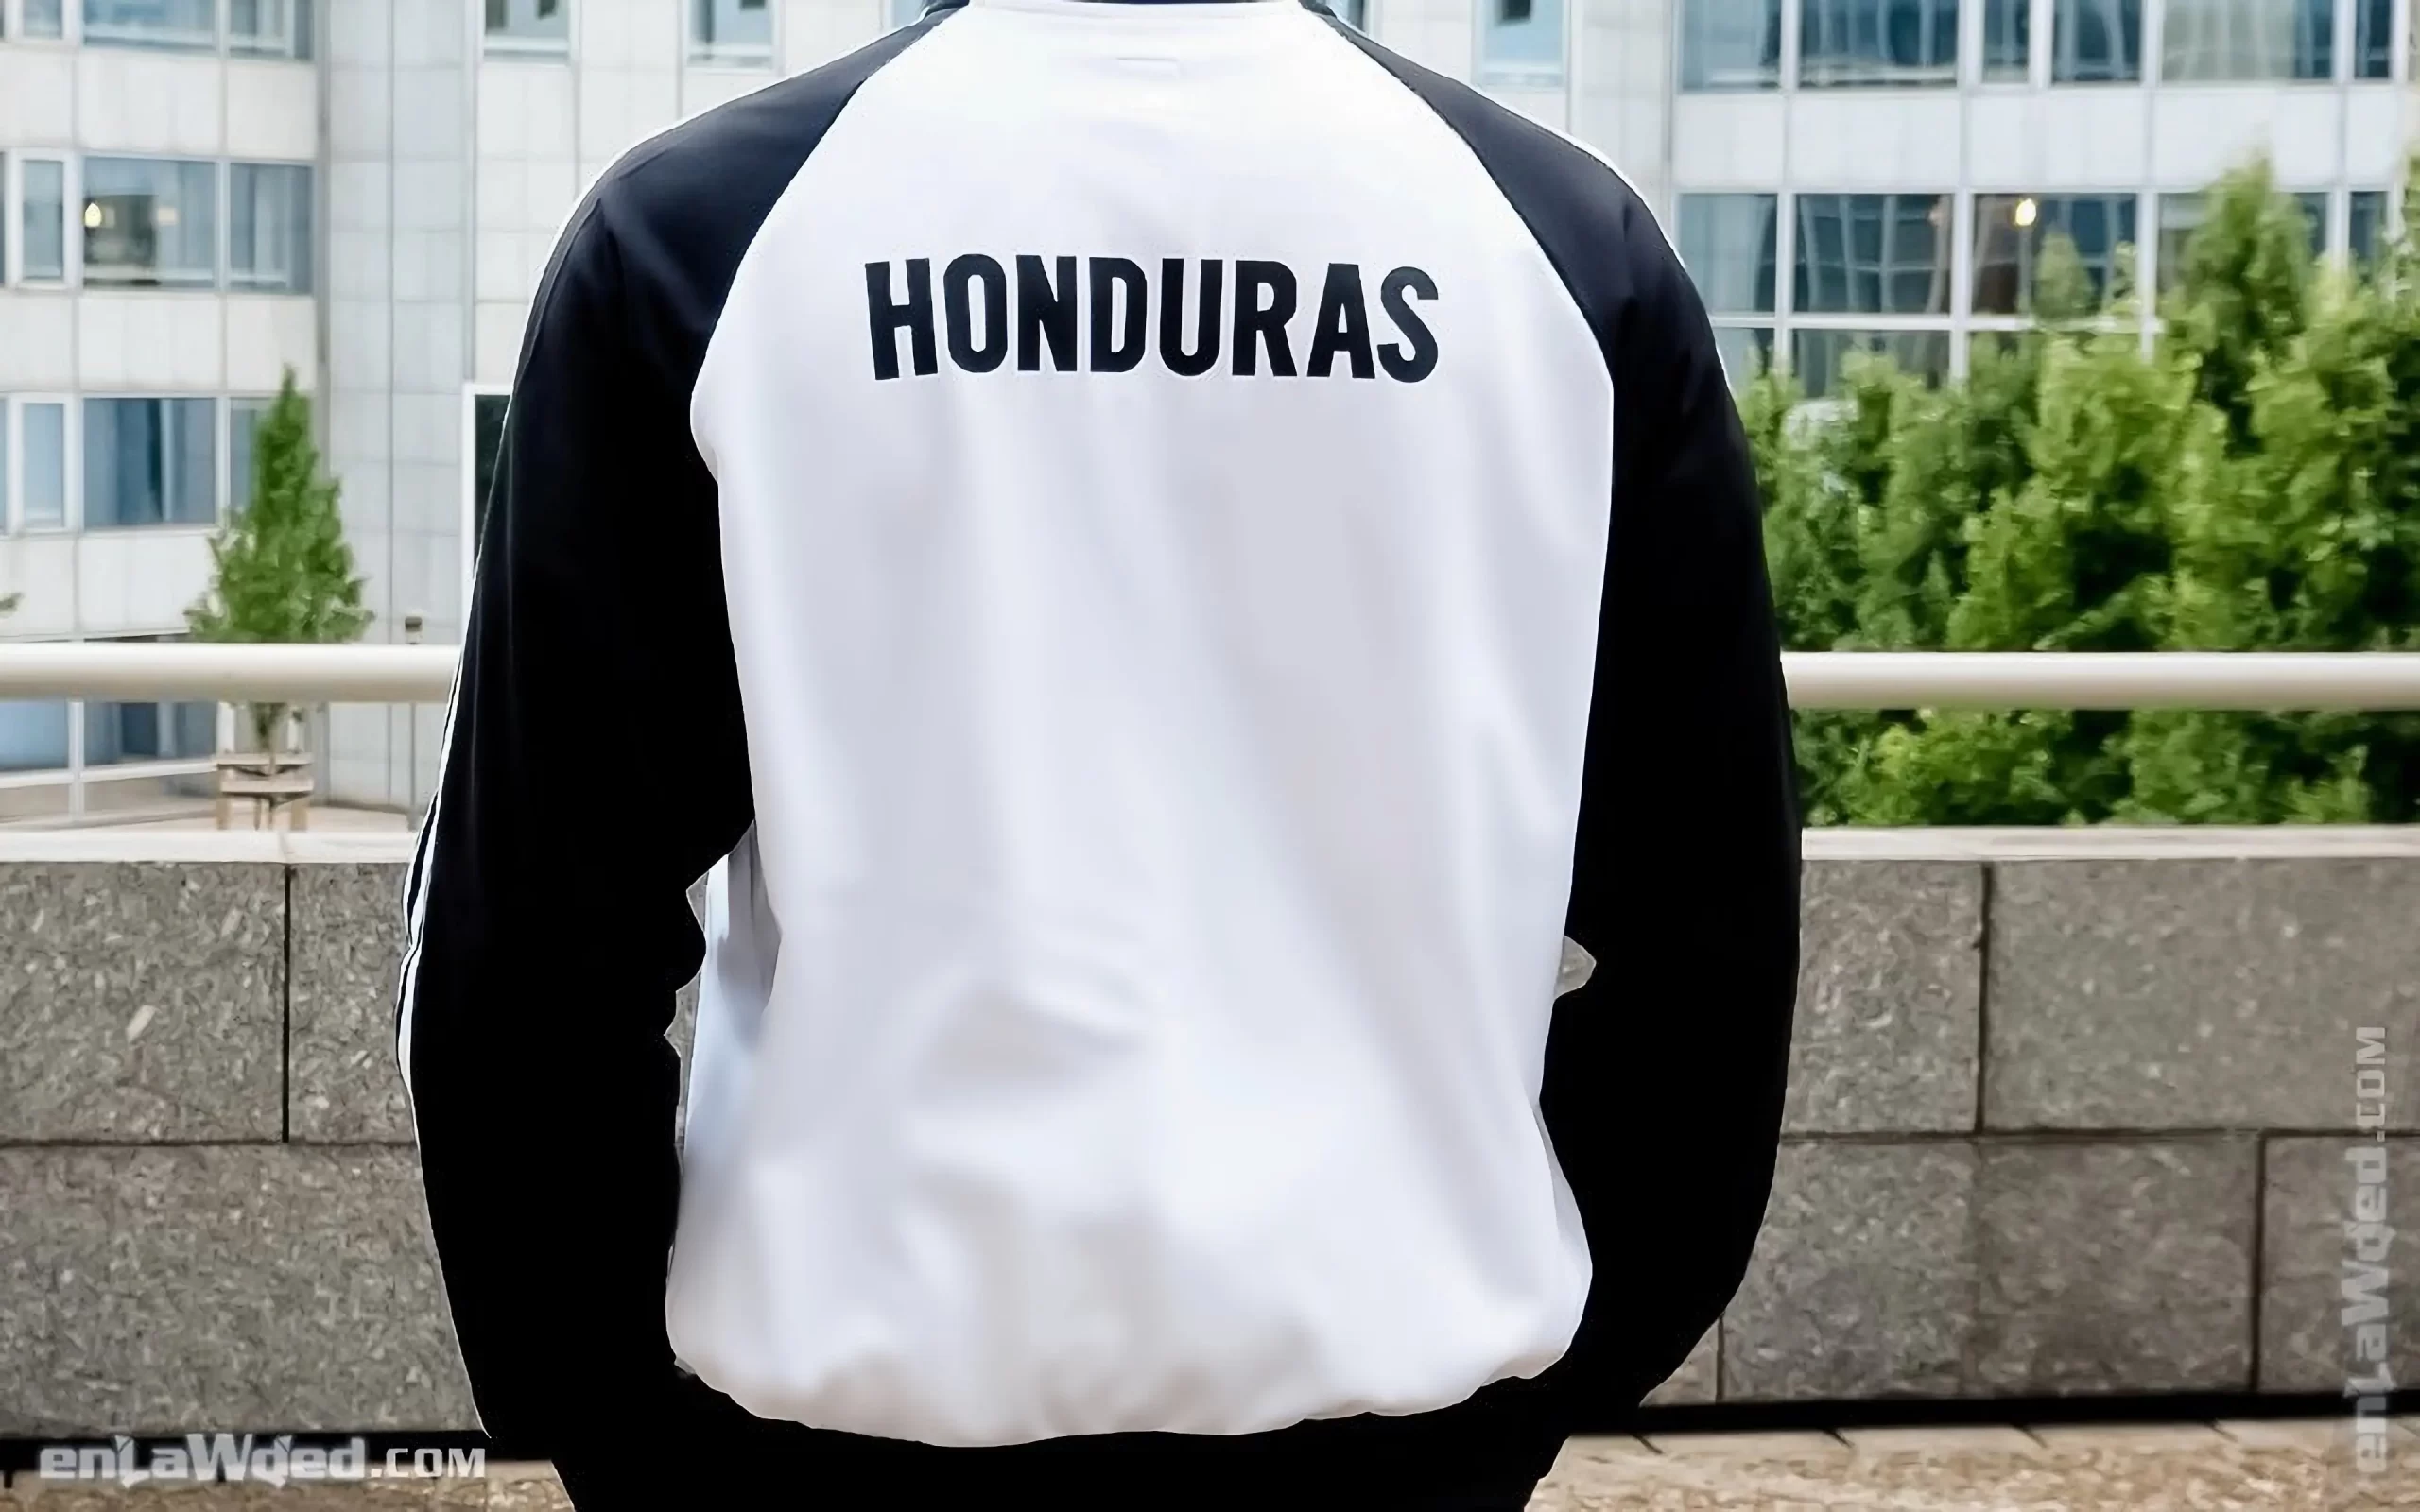 Men’s 2004 Honduras ’82 Track Top by Adidas Originals: Balanced (EnLawded.com file #lmc4ggb5rncbq7a2jj)